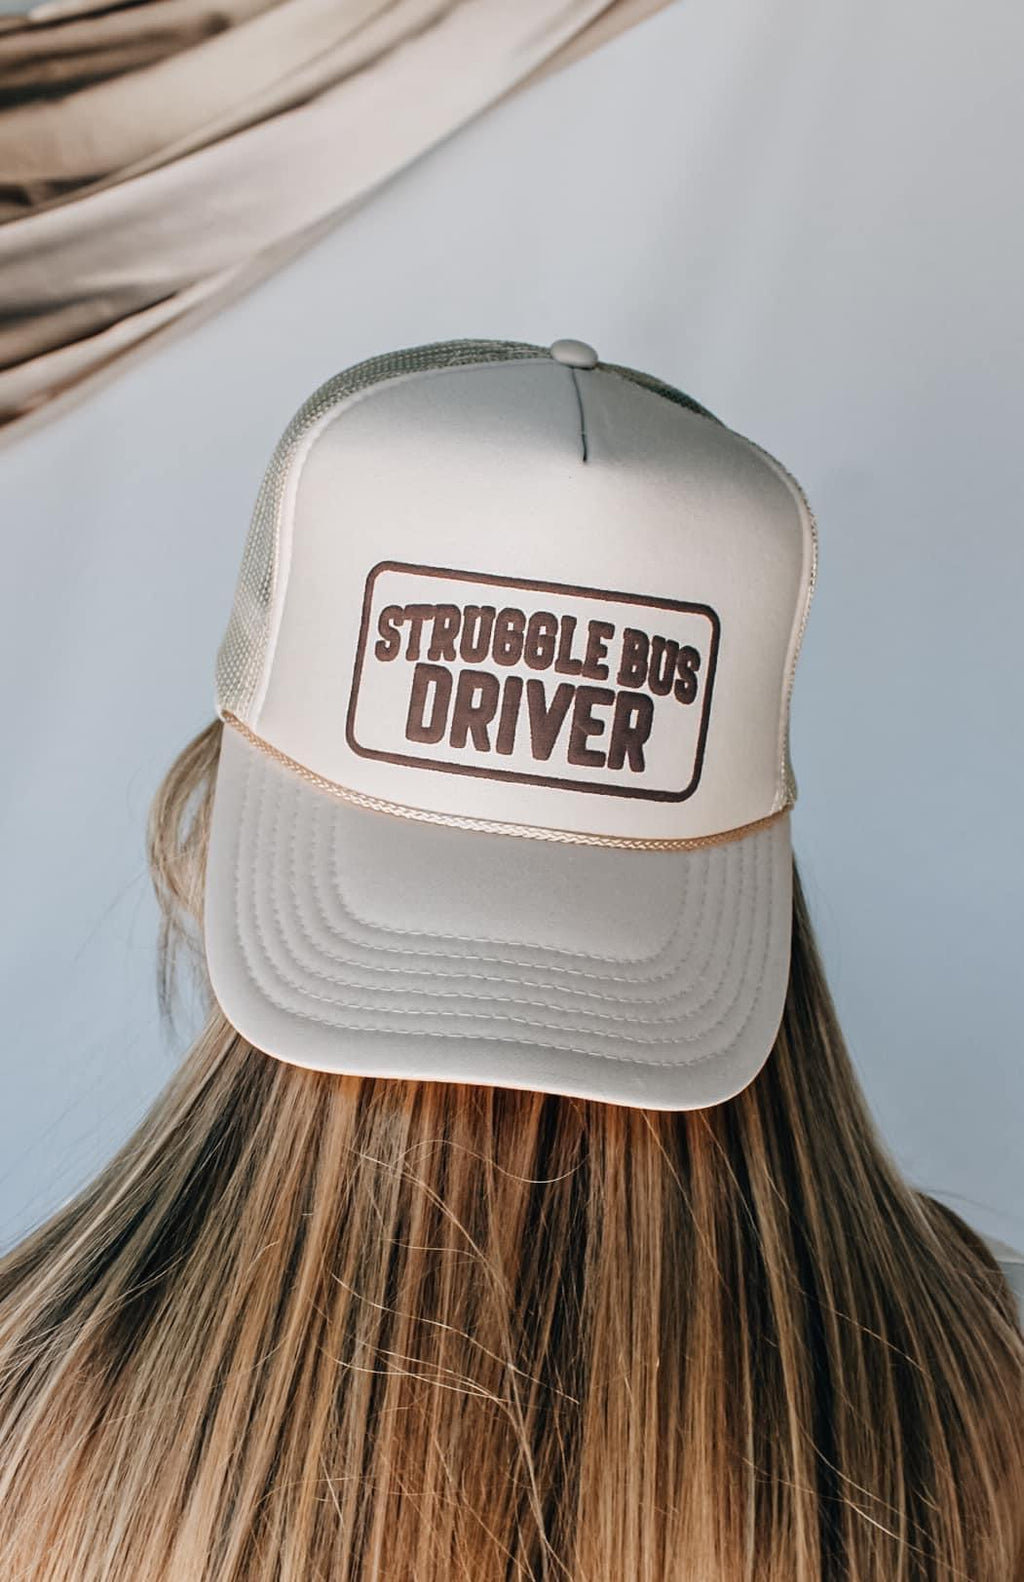 Struggle Bus Driver